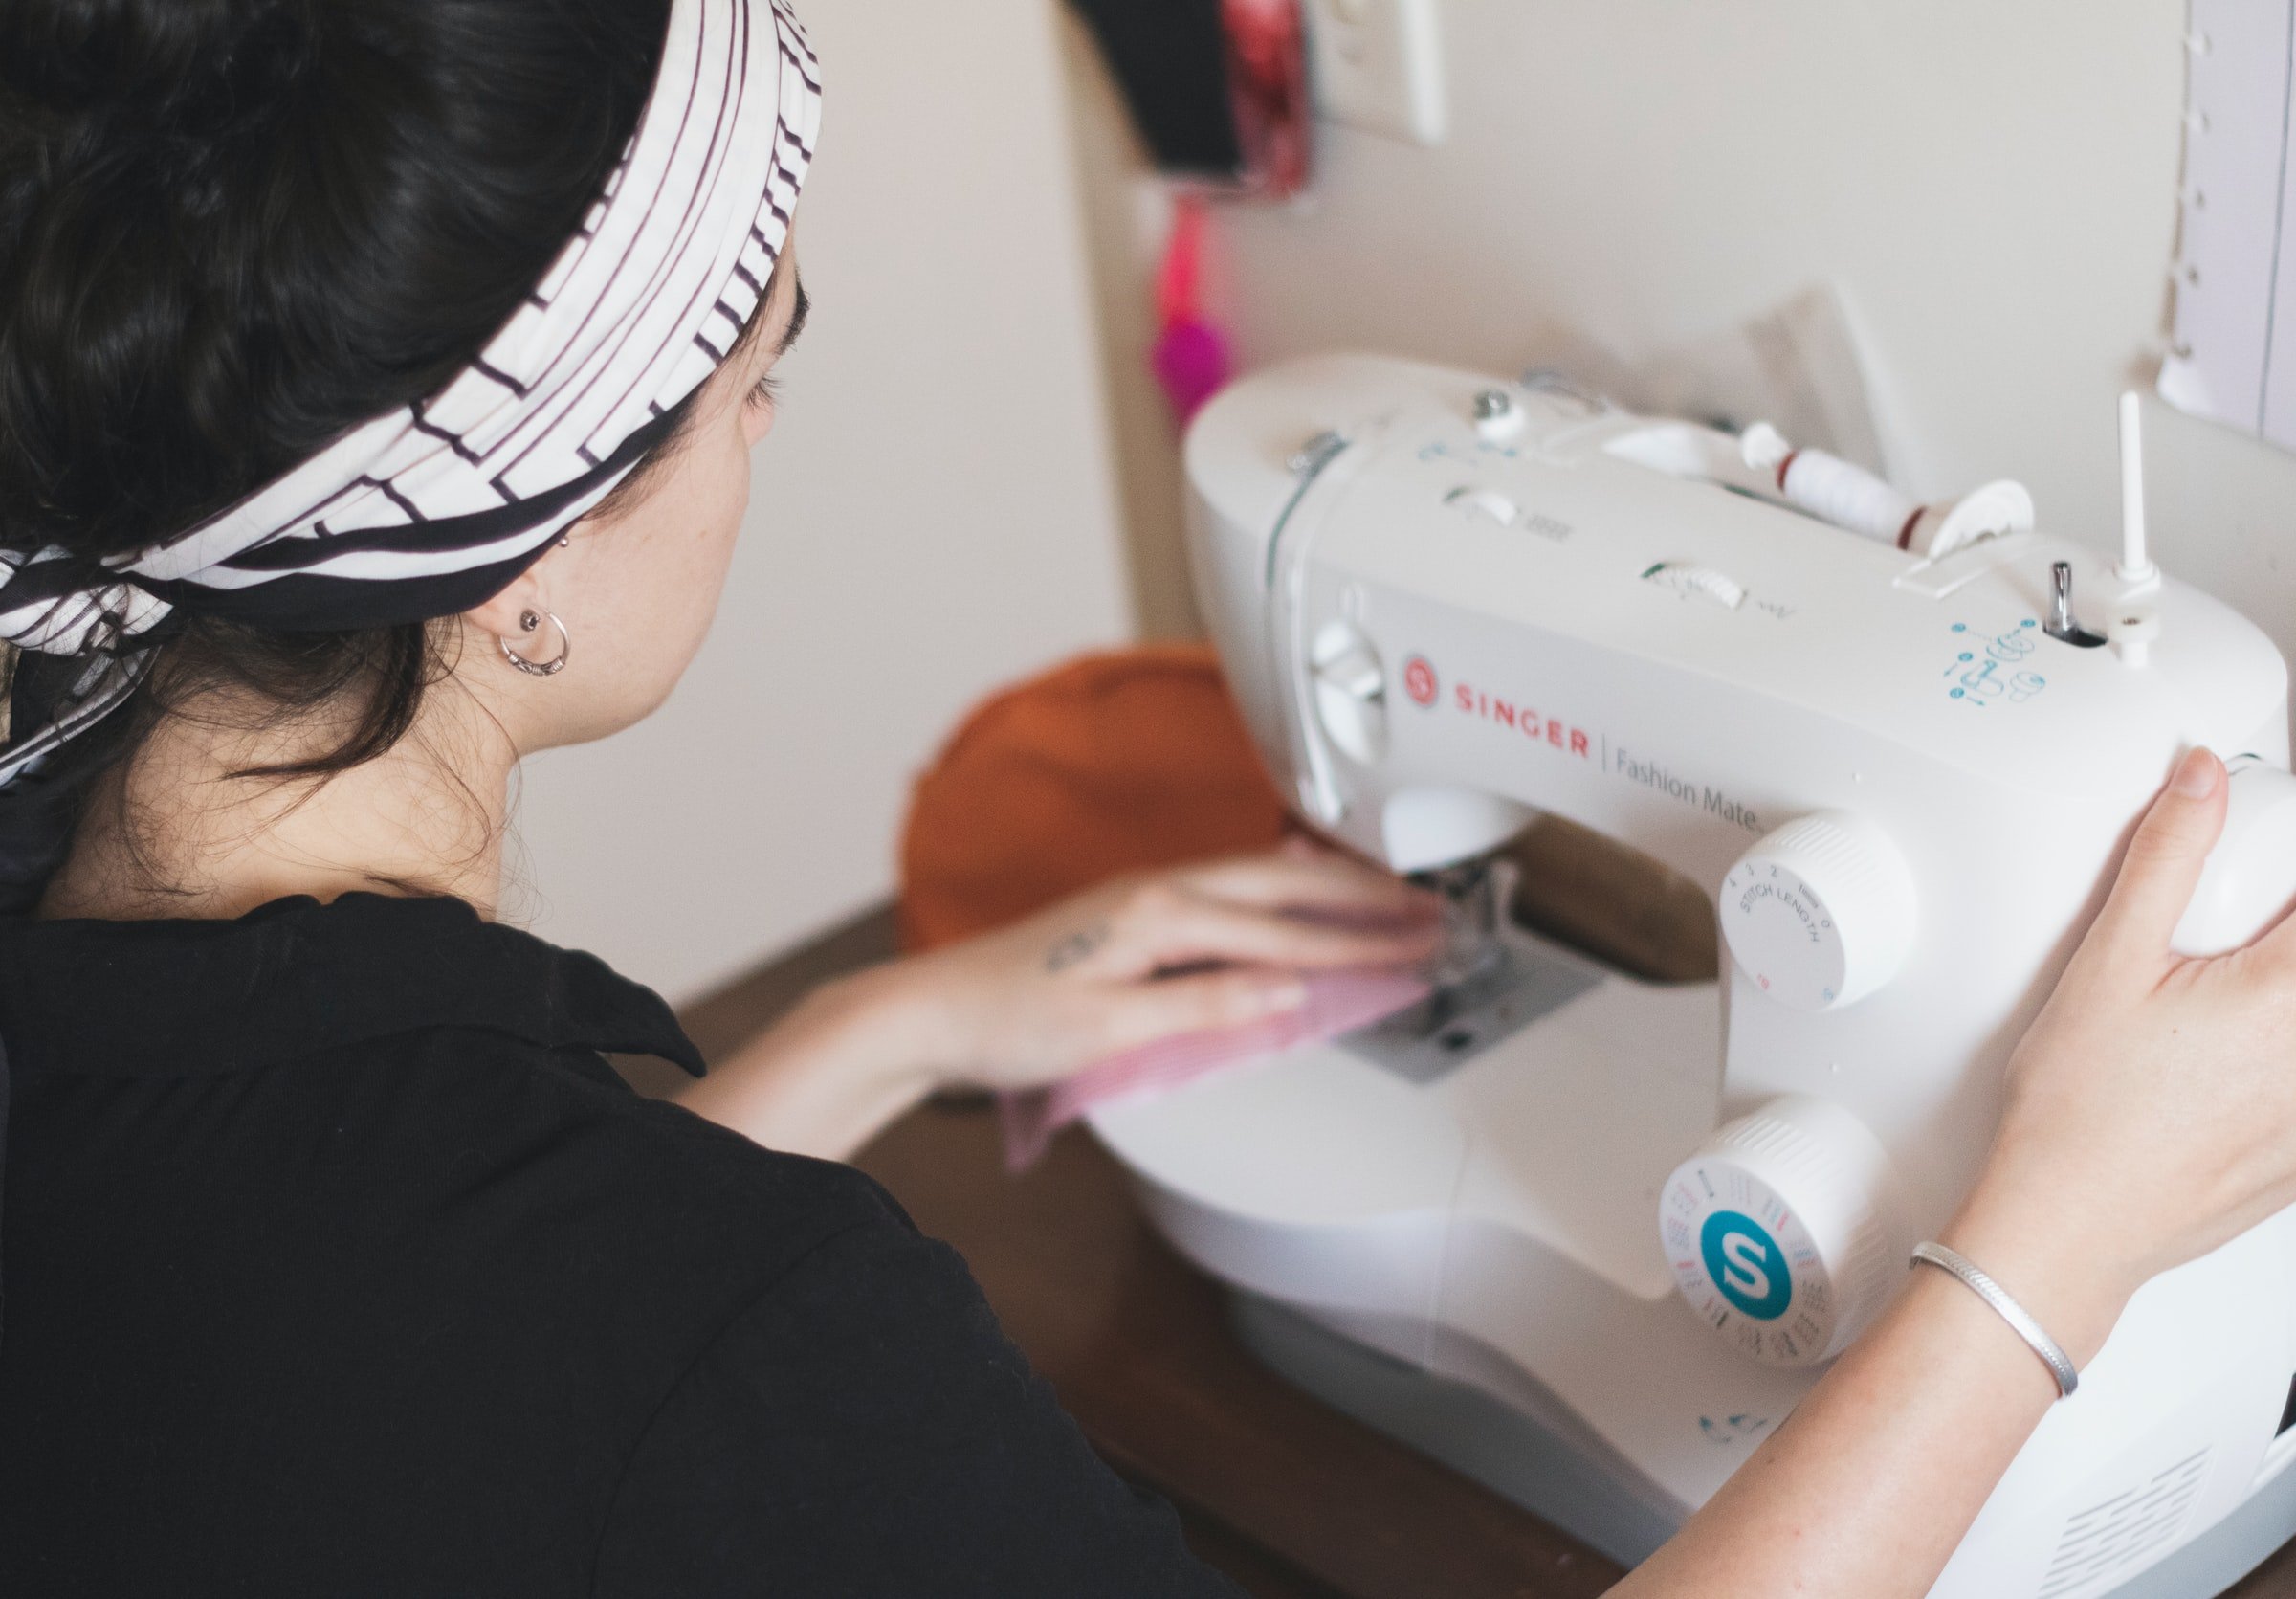 A seamstress at work. | Source: Unsplash